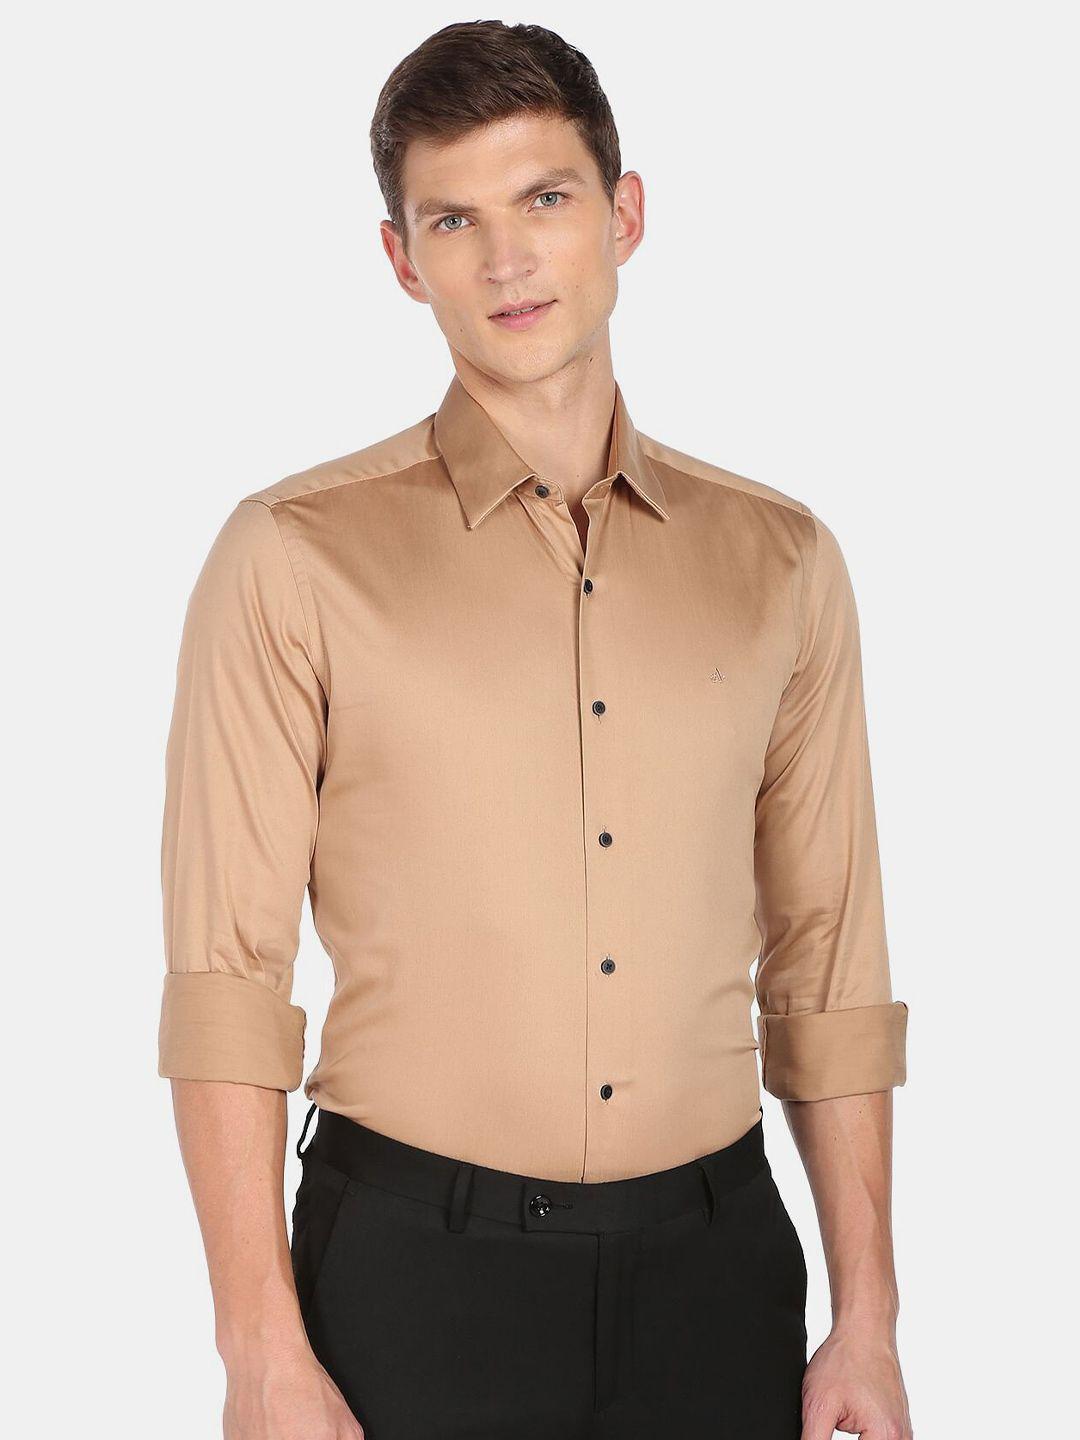 arrow new york men slim fit solid cotton formal shirt